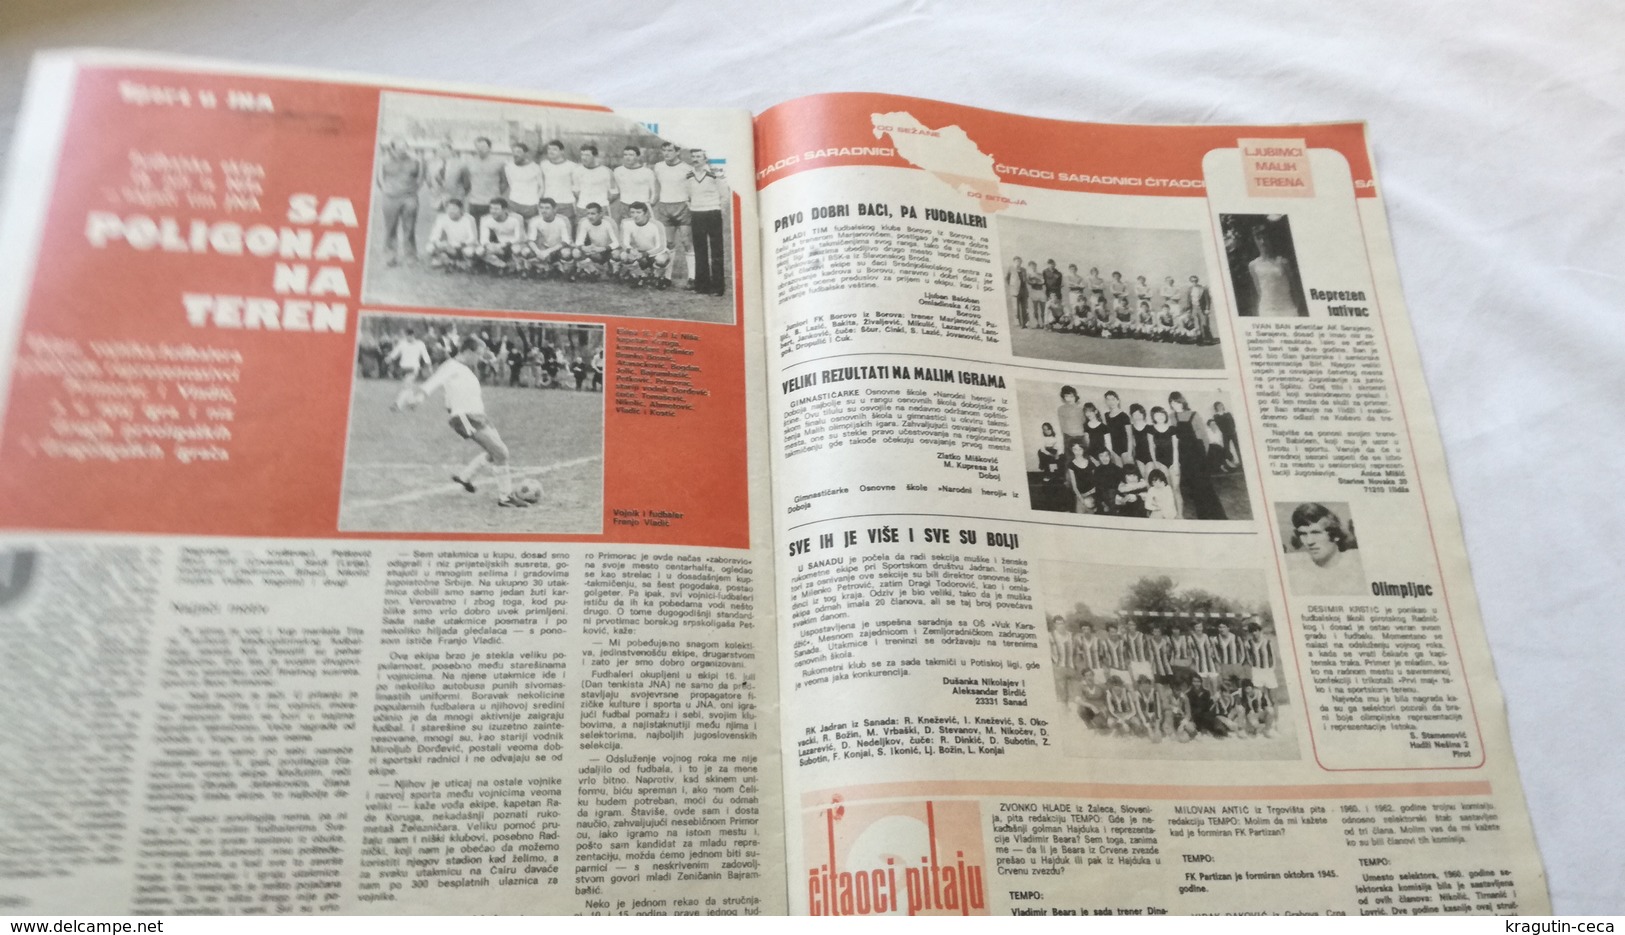 1978 TEMPO YUGOSLAVIA SERBIA SPORT FOOTBALL MAGAZINE NEWSPAPERS AJAX GYMNASTICS SLAVICA KUNDACIN Rubén Hugo Ayala ZVEZDA